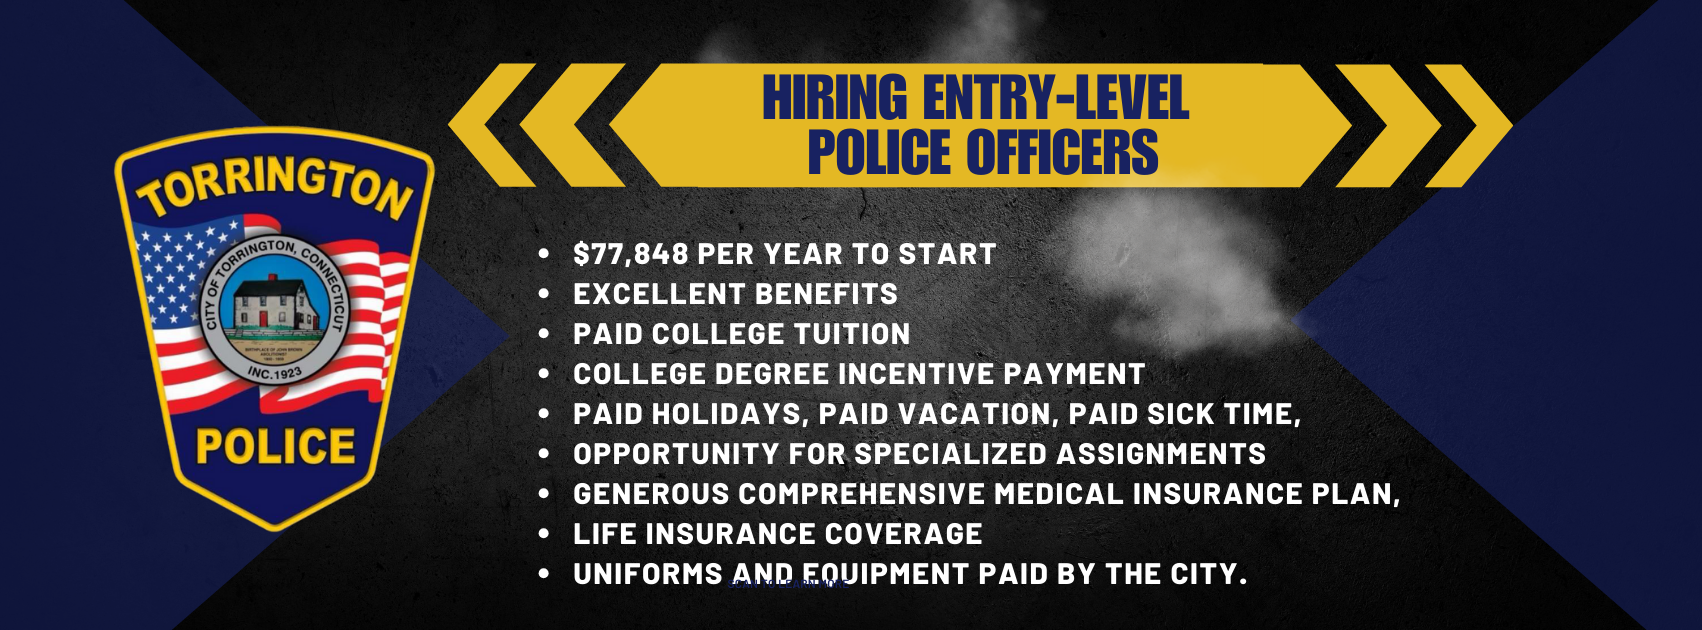 Torrington Police Department, CT Public Safety Jobs